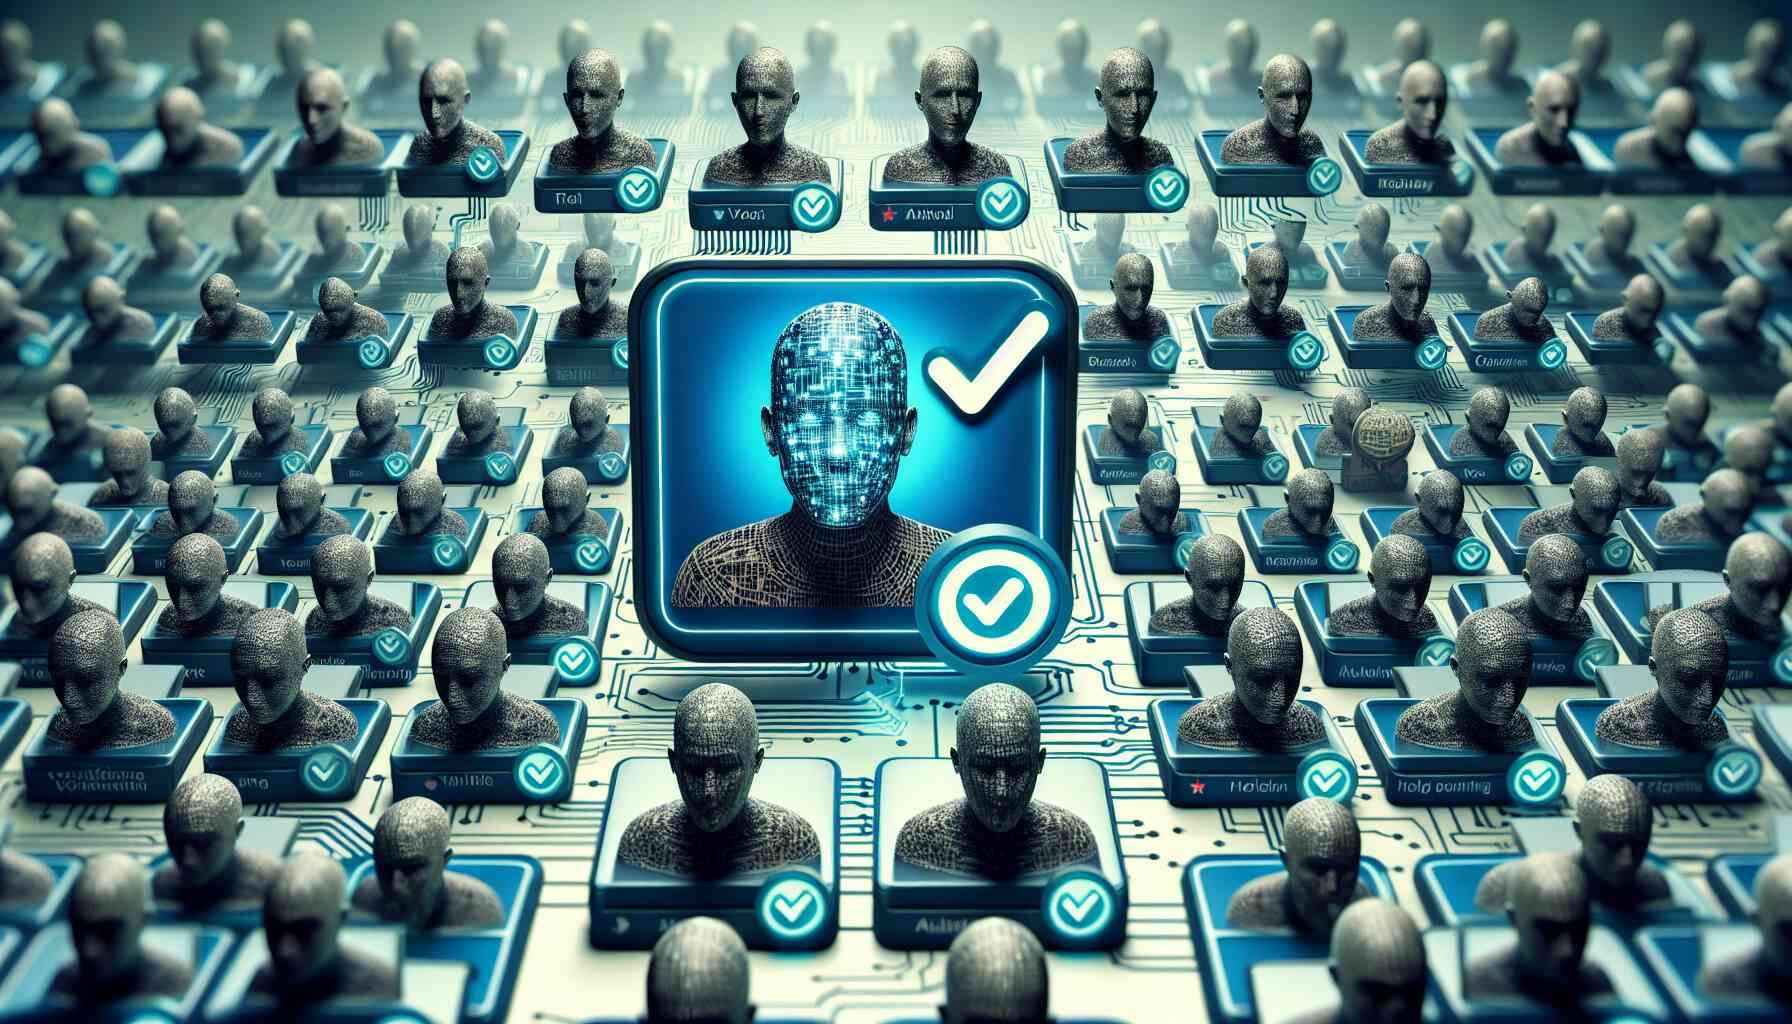 X (Twitter) Faces Verified Bot Problem: AI-Powered Accounts Flood The Platform